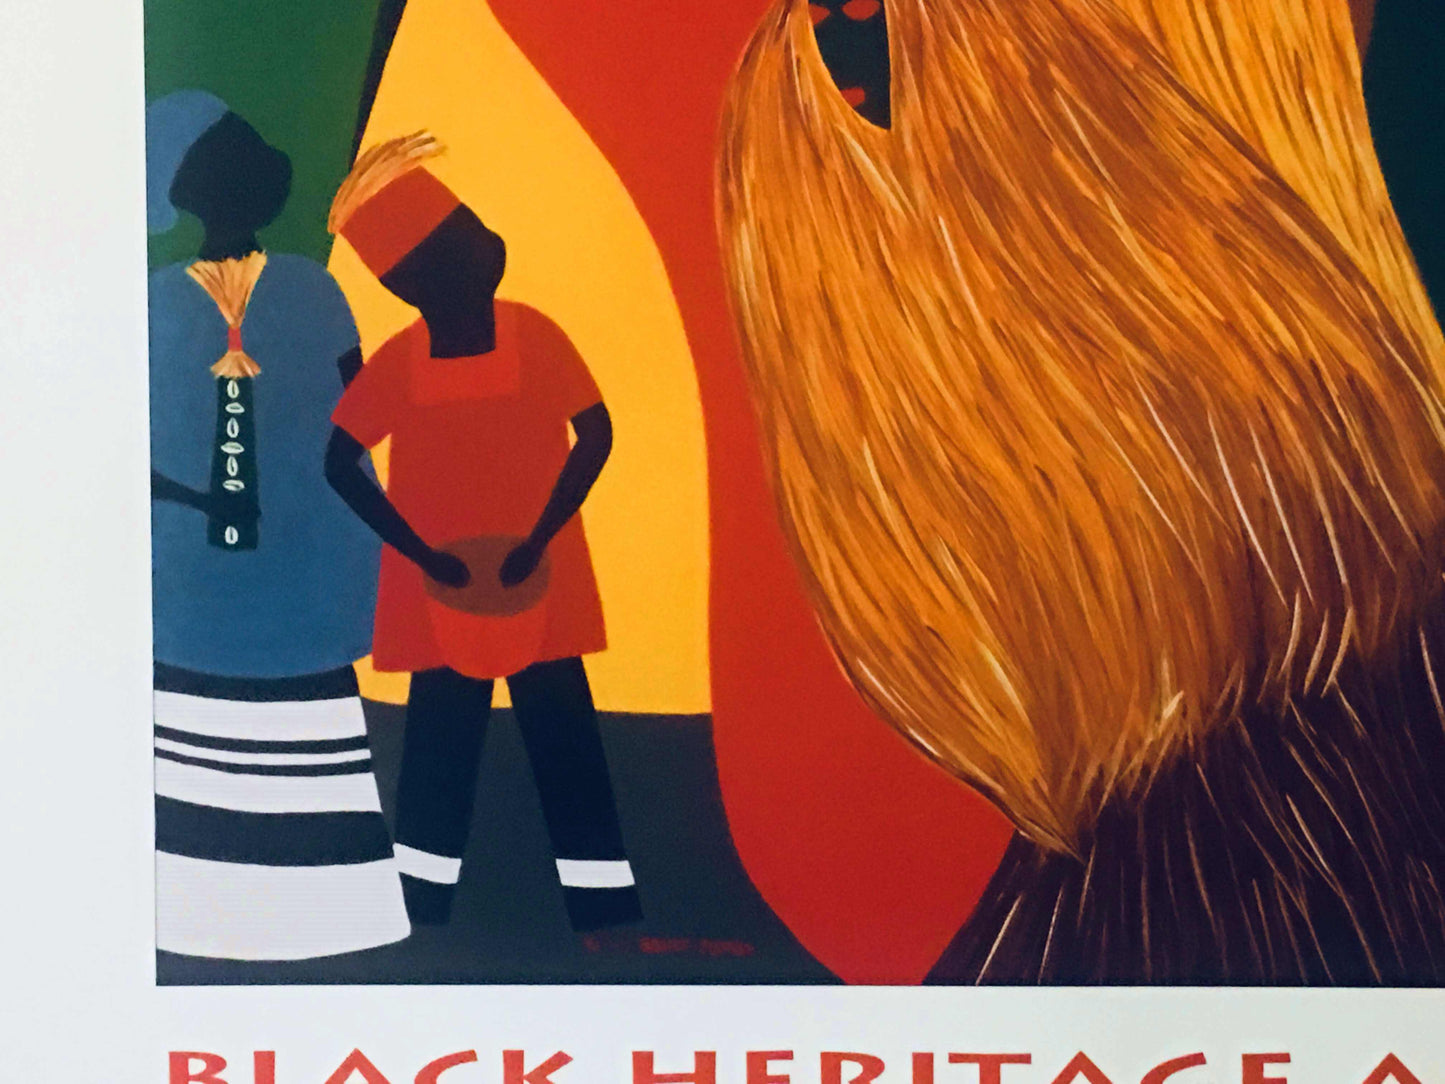 1996 Black Heritage Art Show “Celebration” Poster by Synthia Saint James